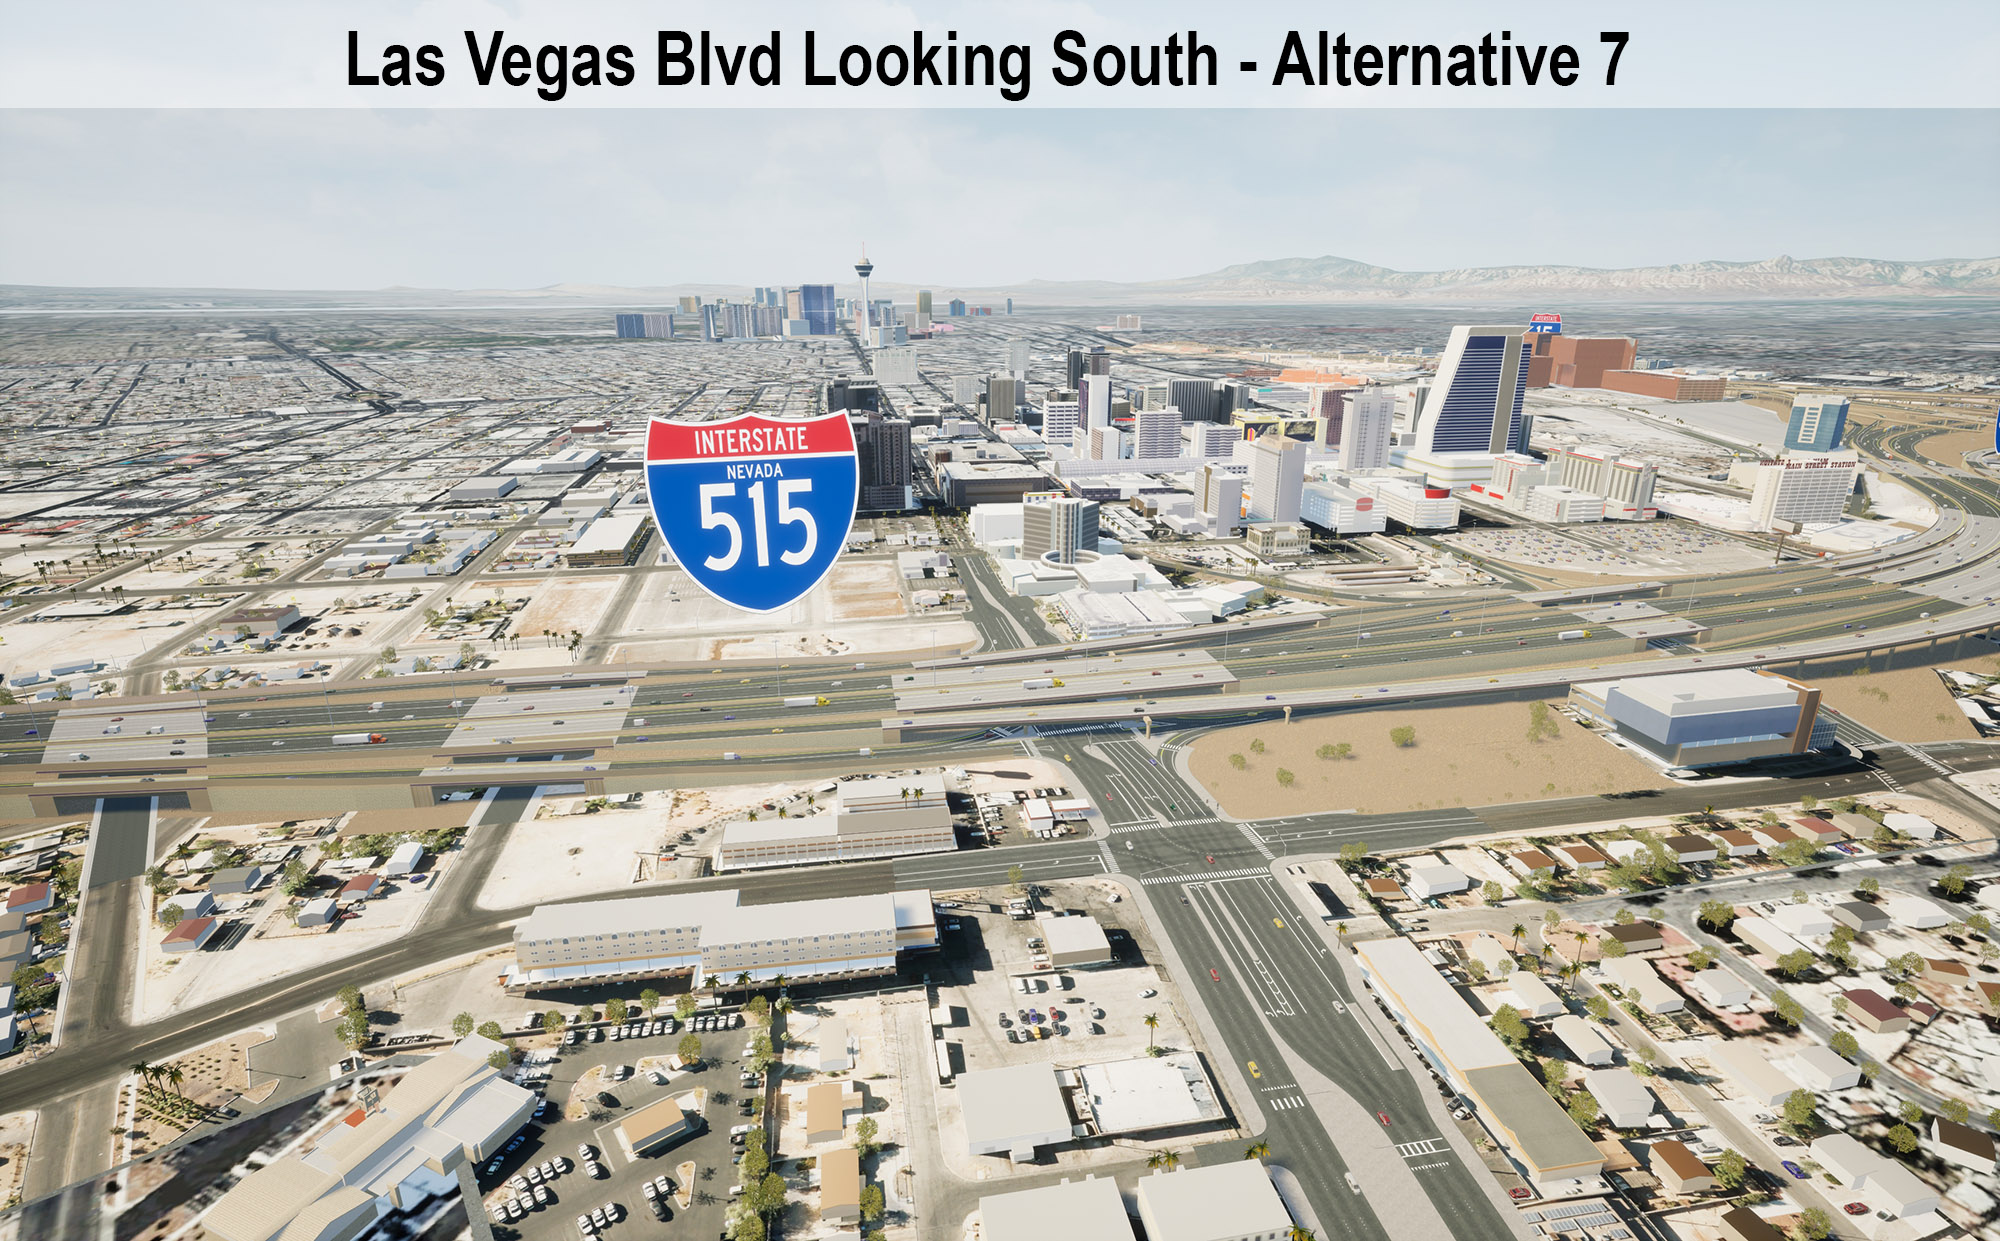 Las Vegas Blvd Looking South - Alternative 7